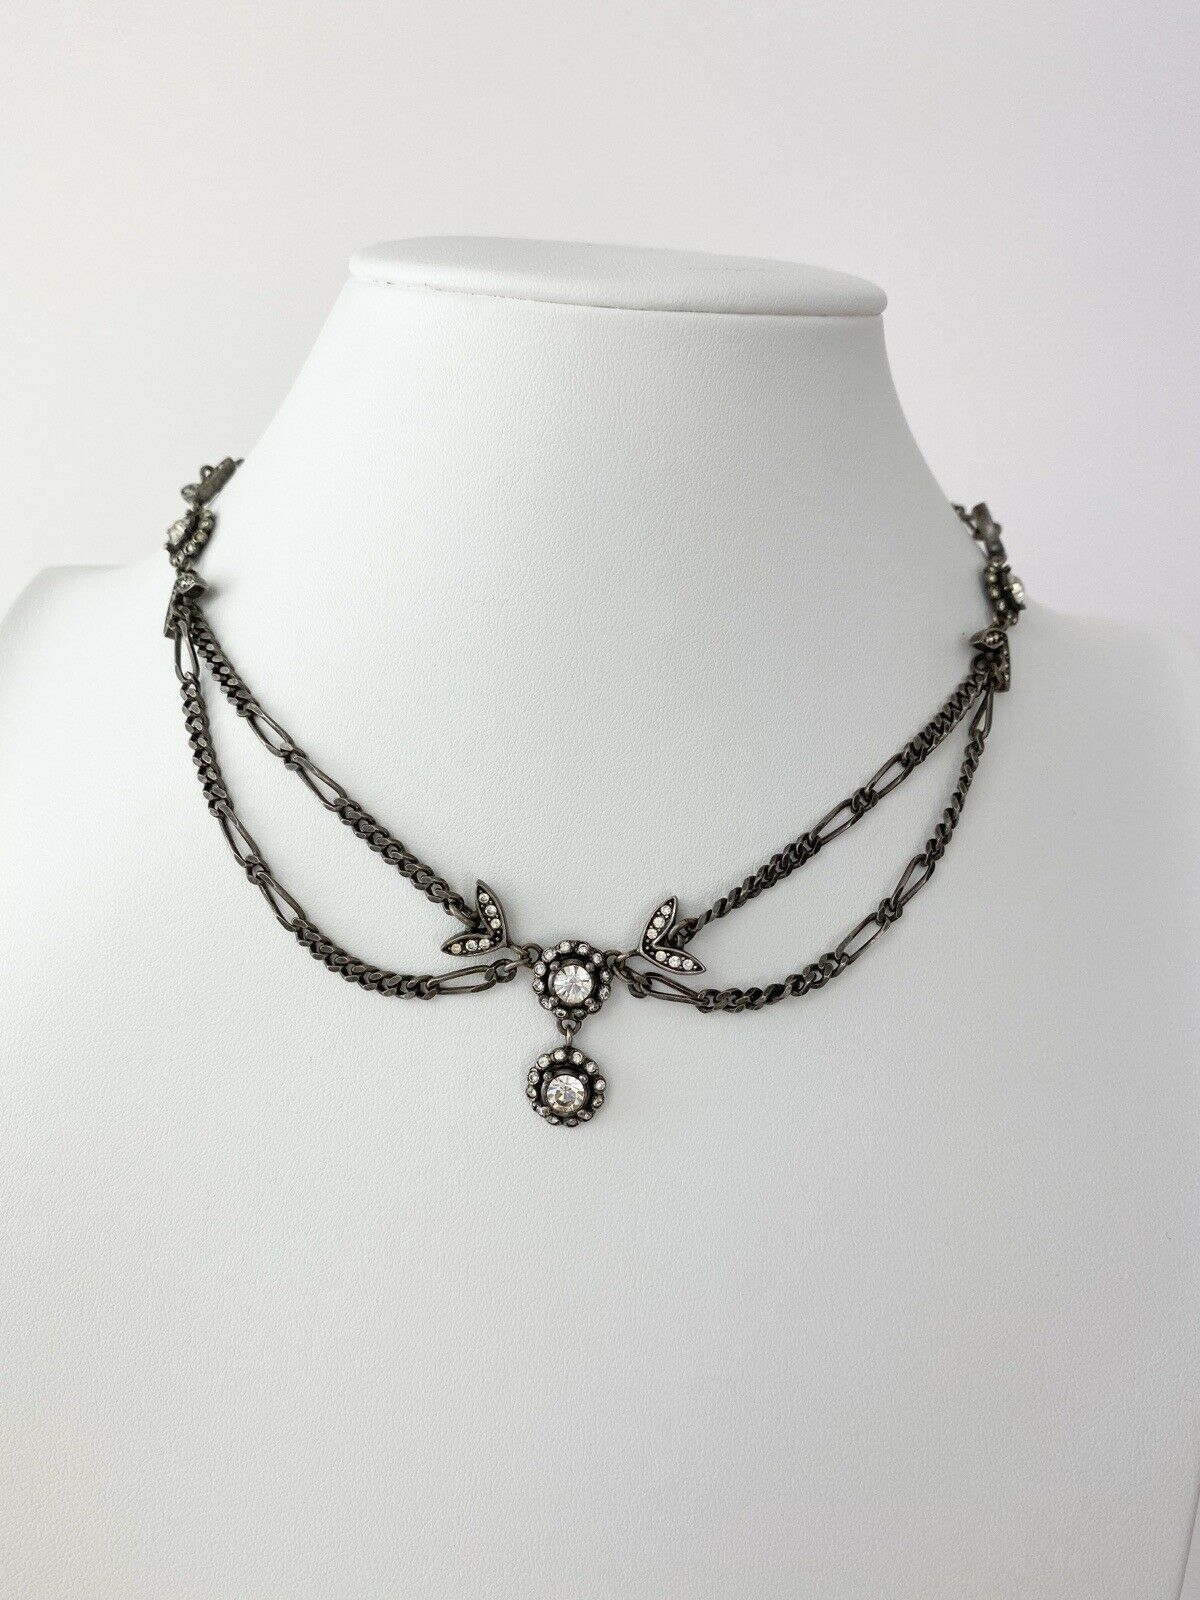 Christian Dior Vintage Necklace Black Tone Flower Rhinestone